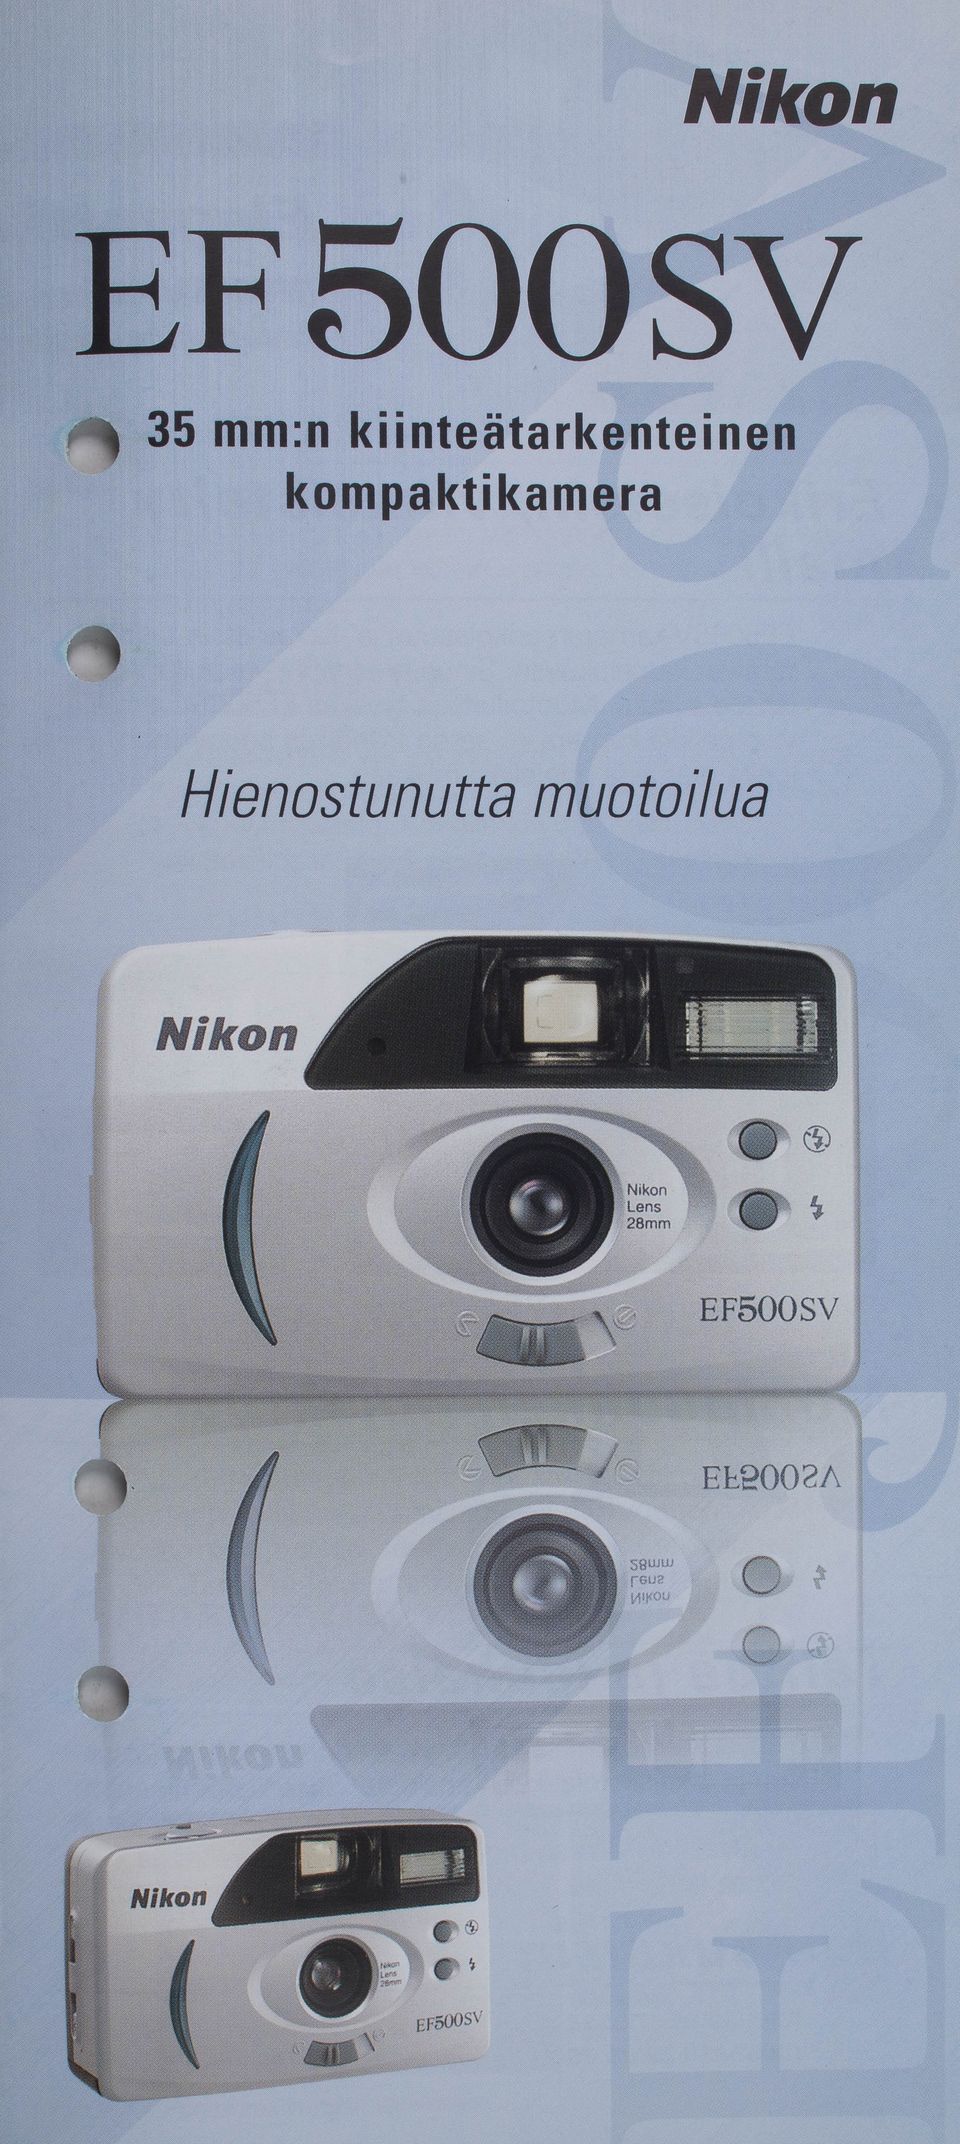 Nikon EF500SV